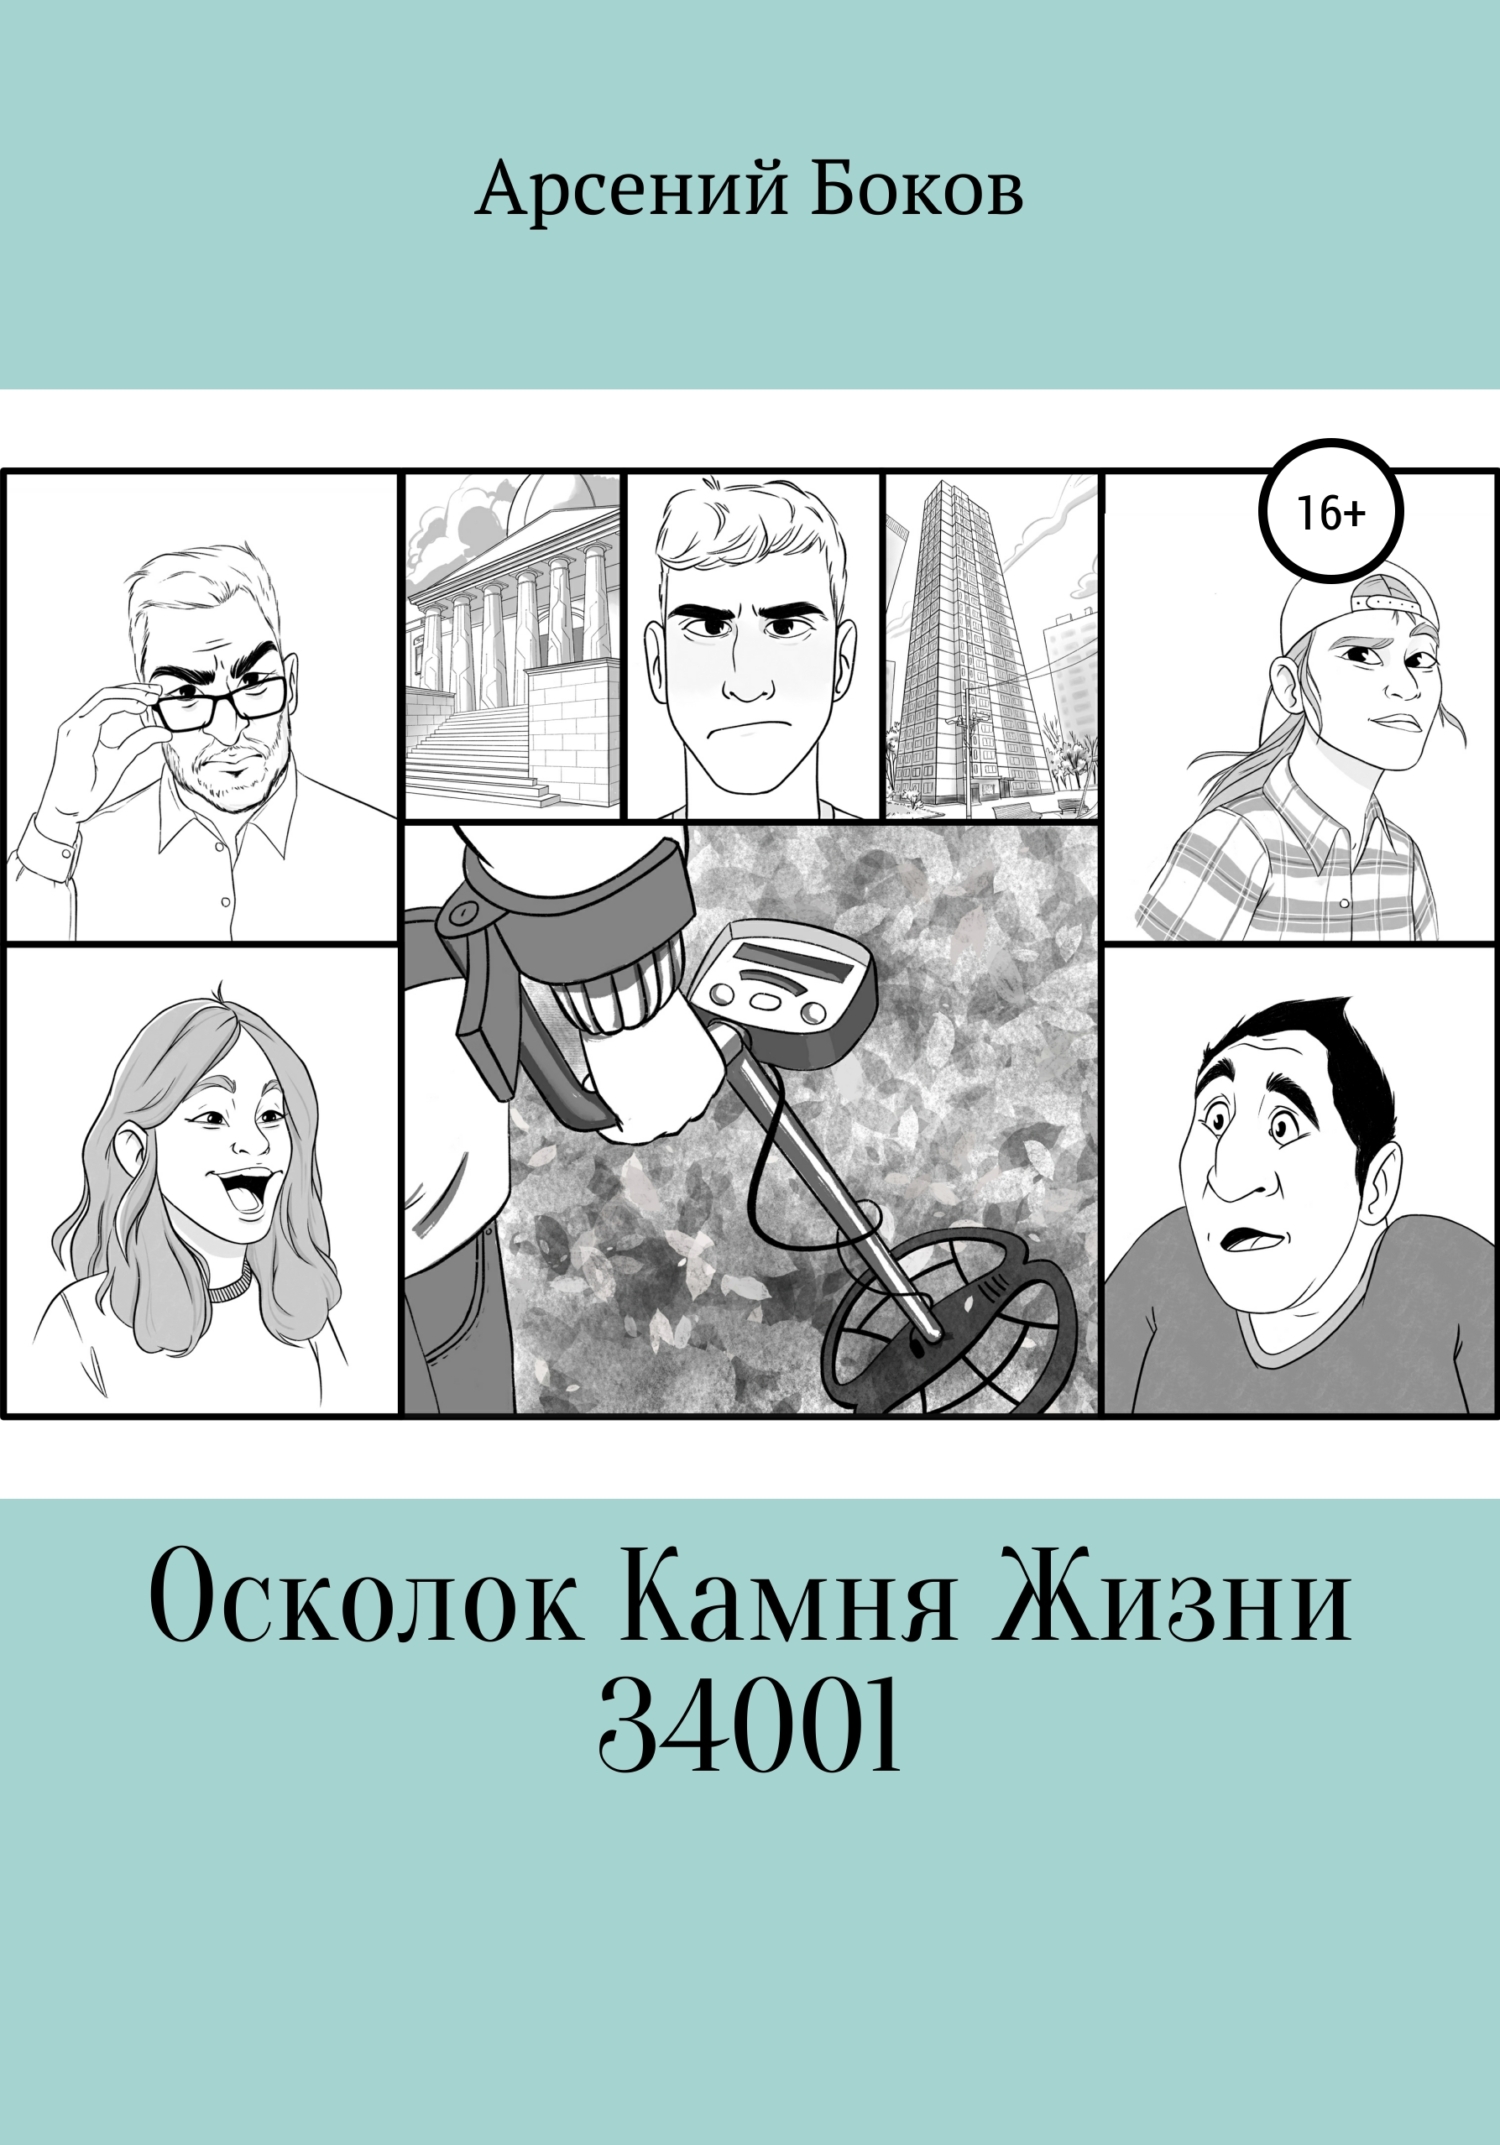 Осколок Камня Жизни 34001 - Арсений Боков